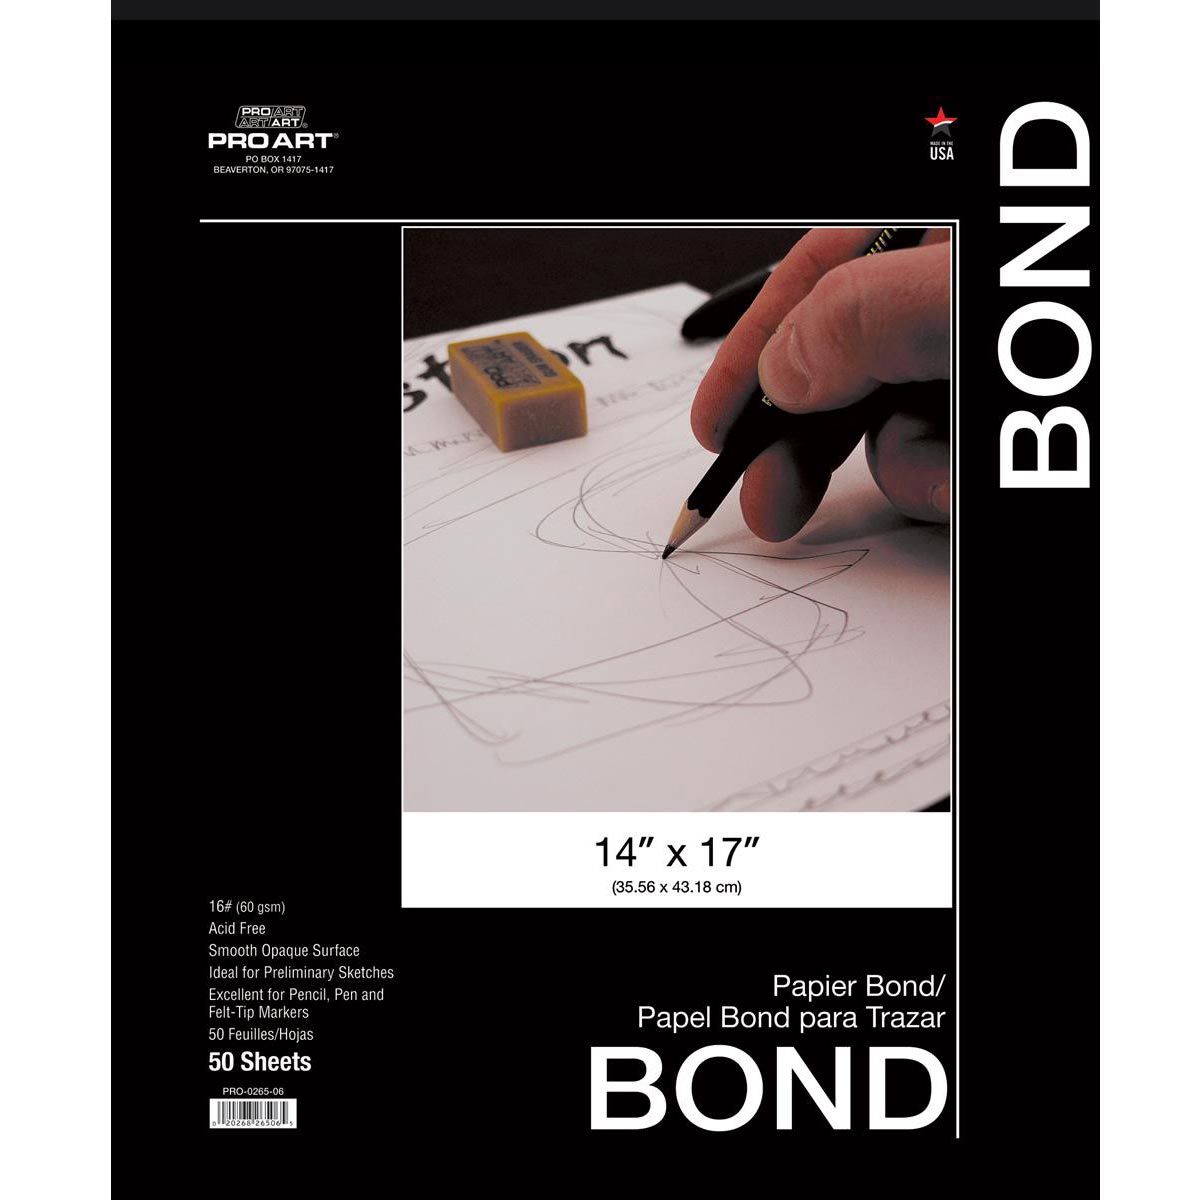 Pro Art Bright White Bond Layout Paper Pad 14x17 inches